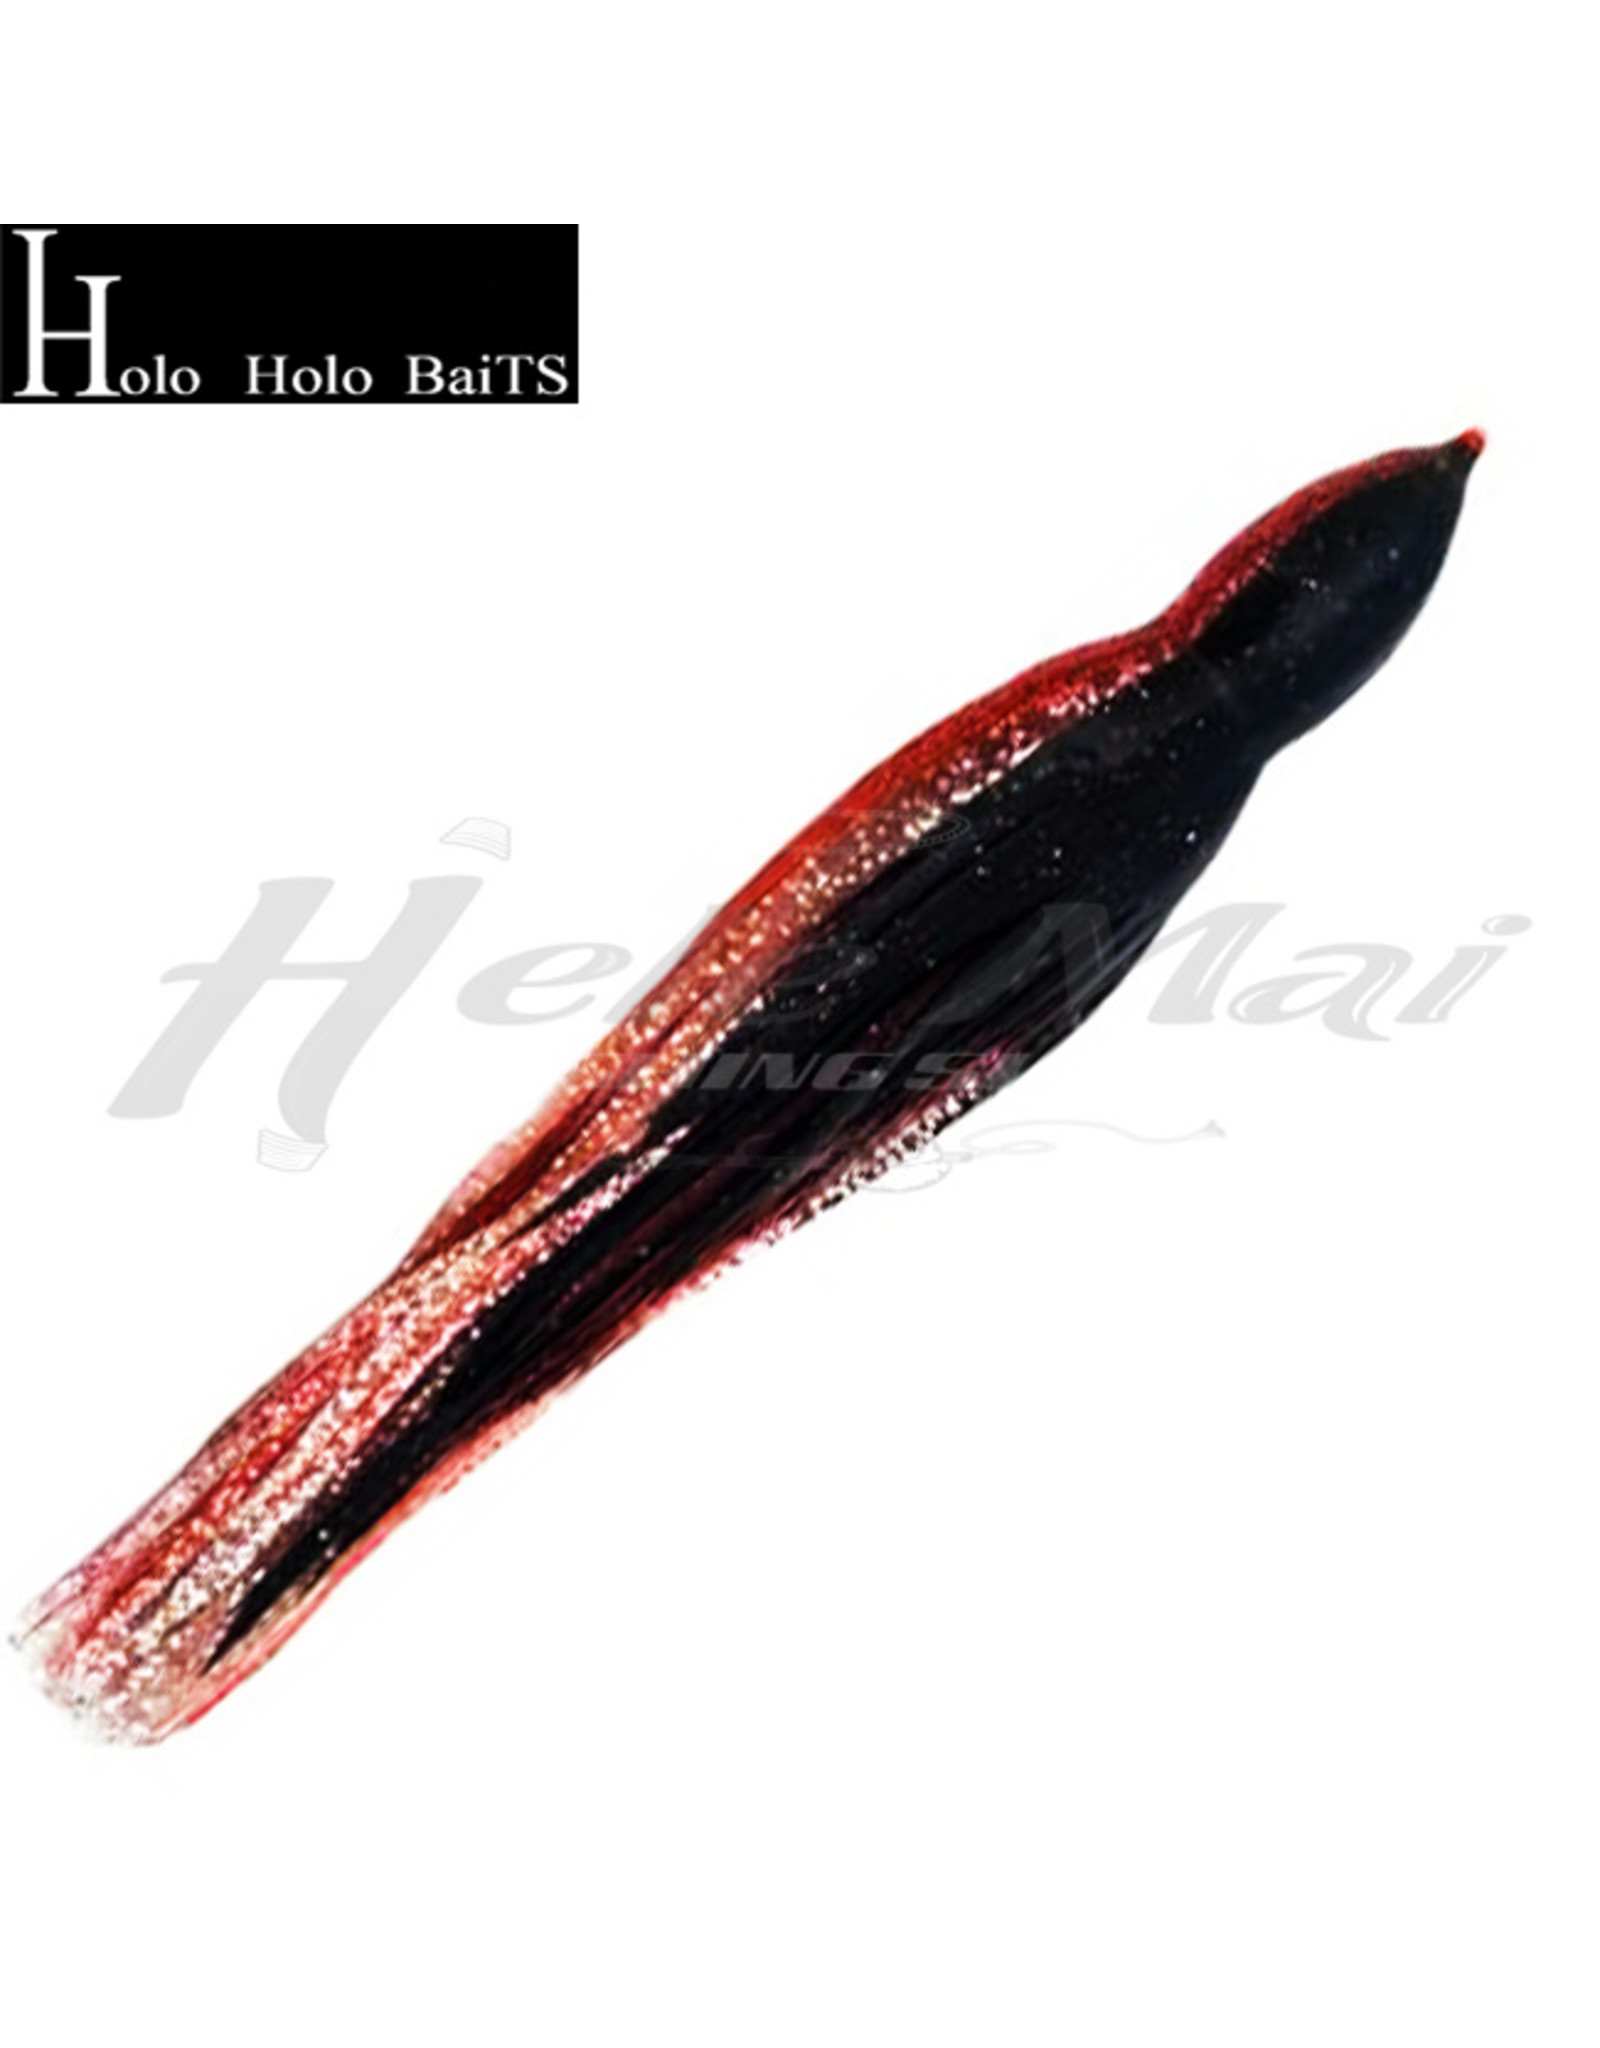 HOLO HOLO HAWAII (HHH) HH, 7" SQUID SKIRT BLACK PINK GLITTER 0002